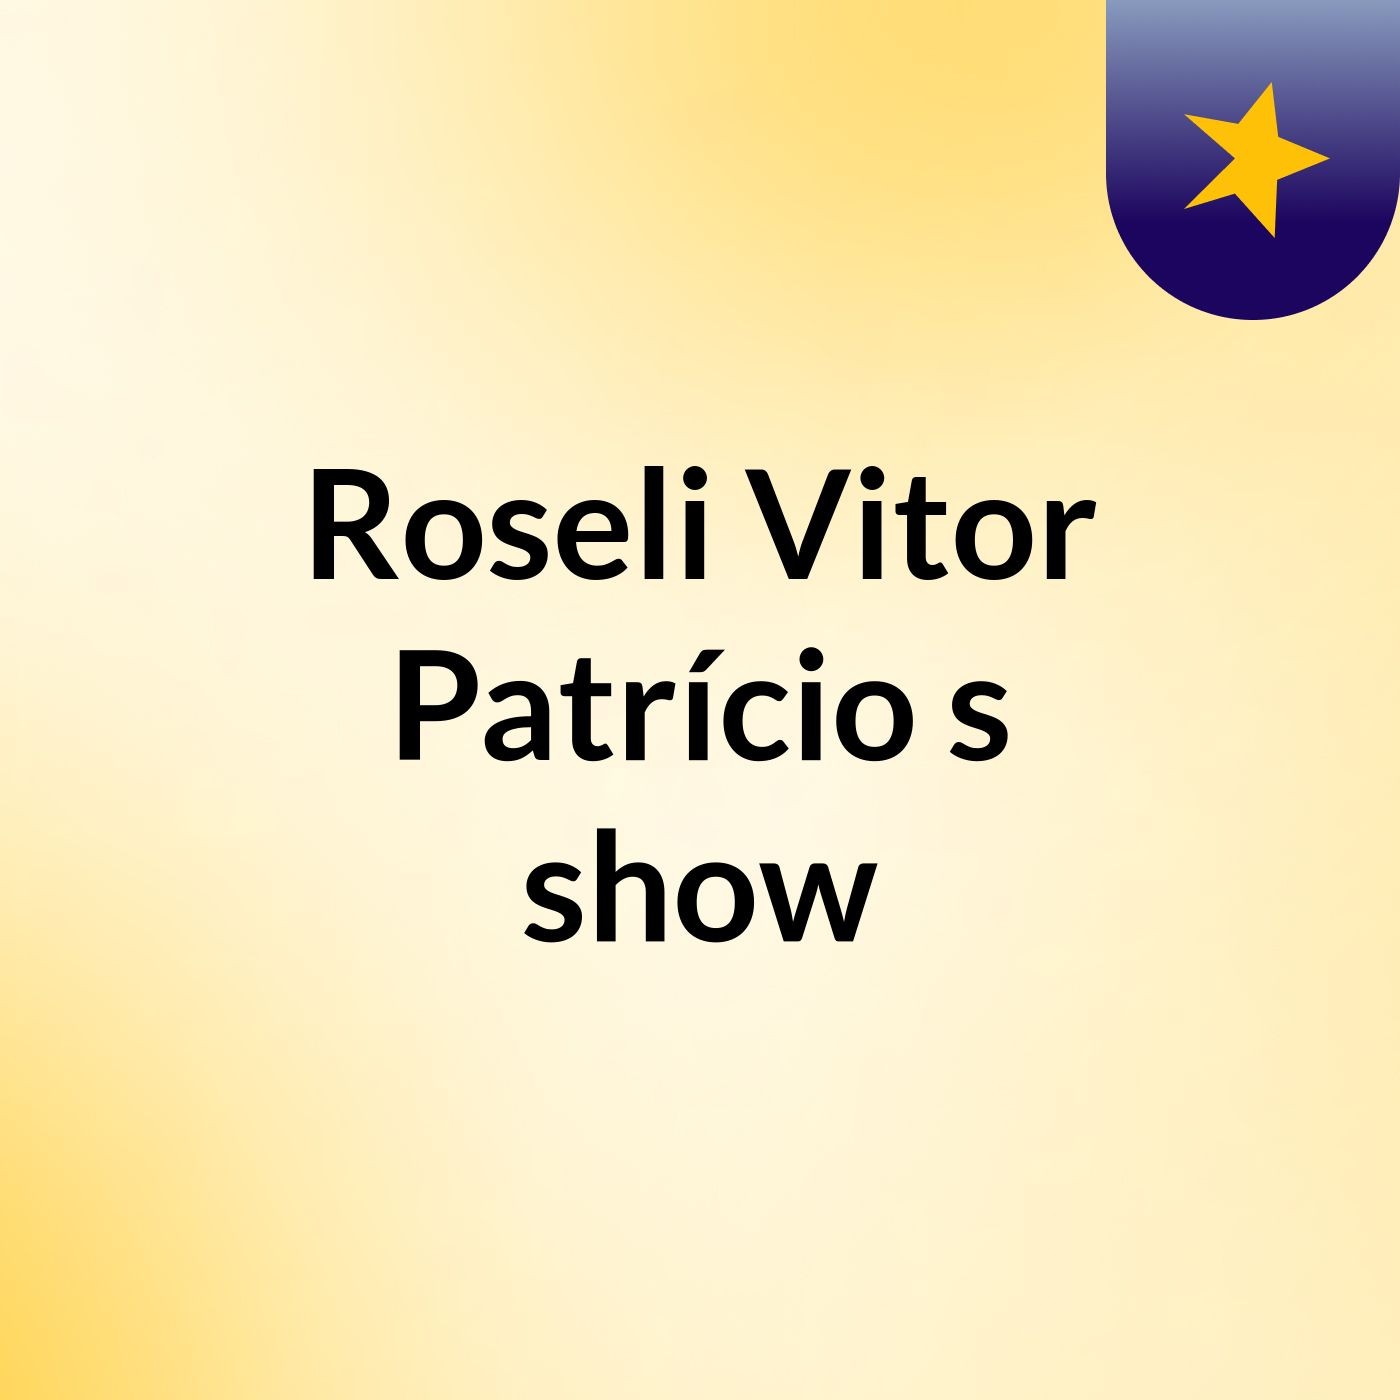 Roseli Vitor Patrício's show